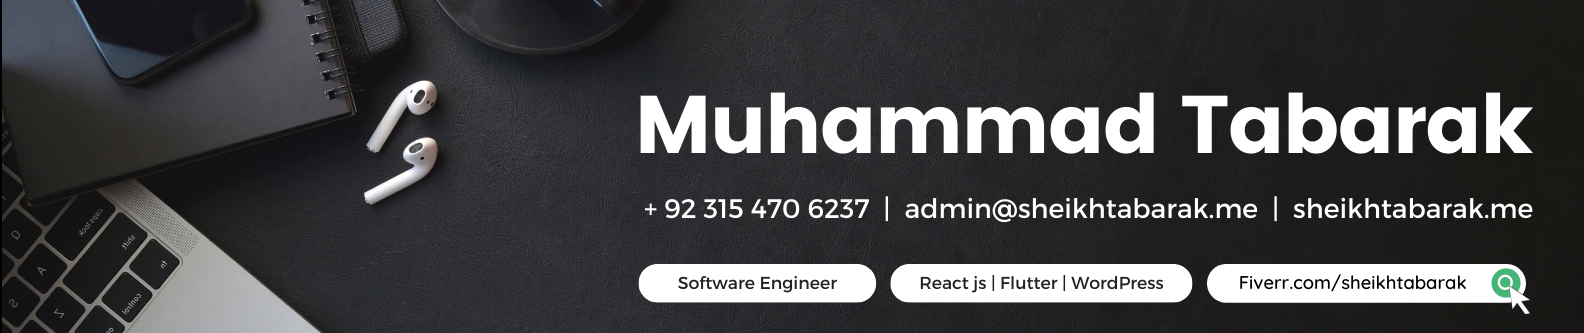 Muhammad Tabarak's profile banner